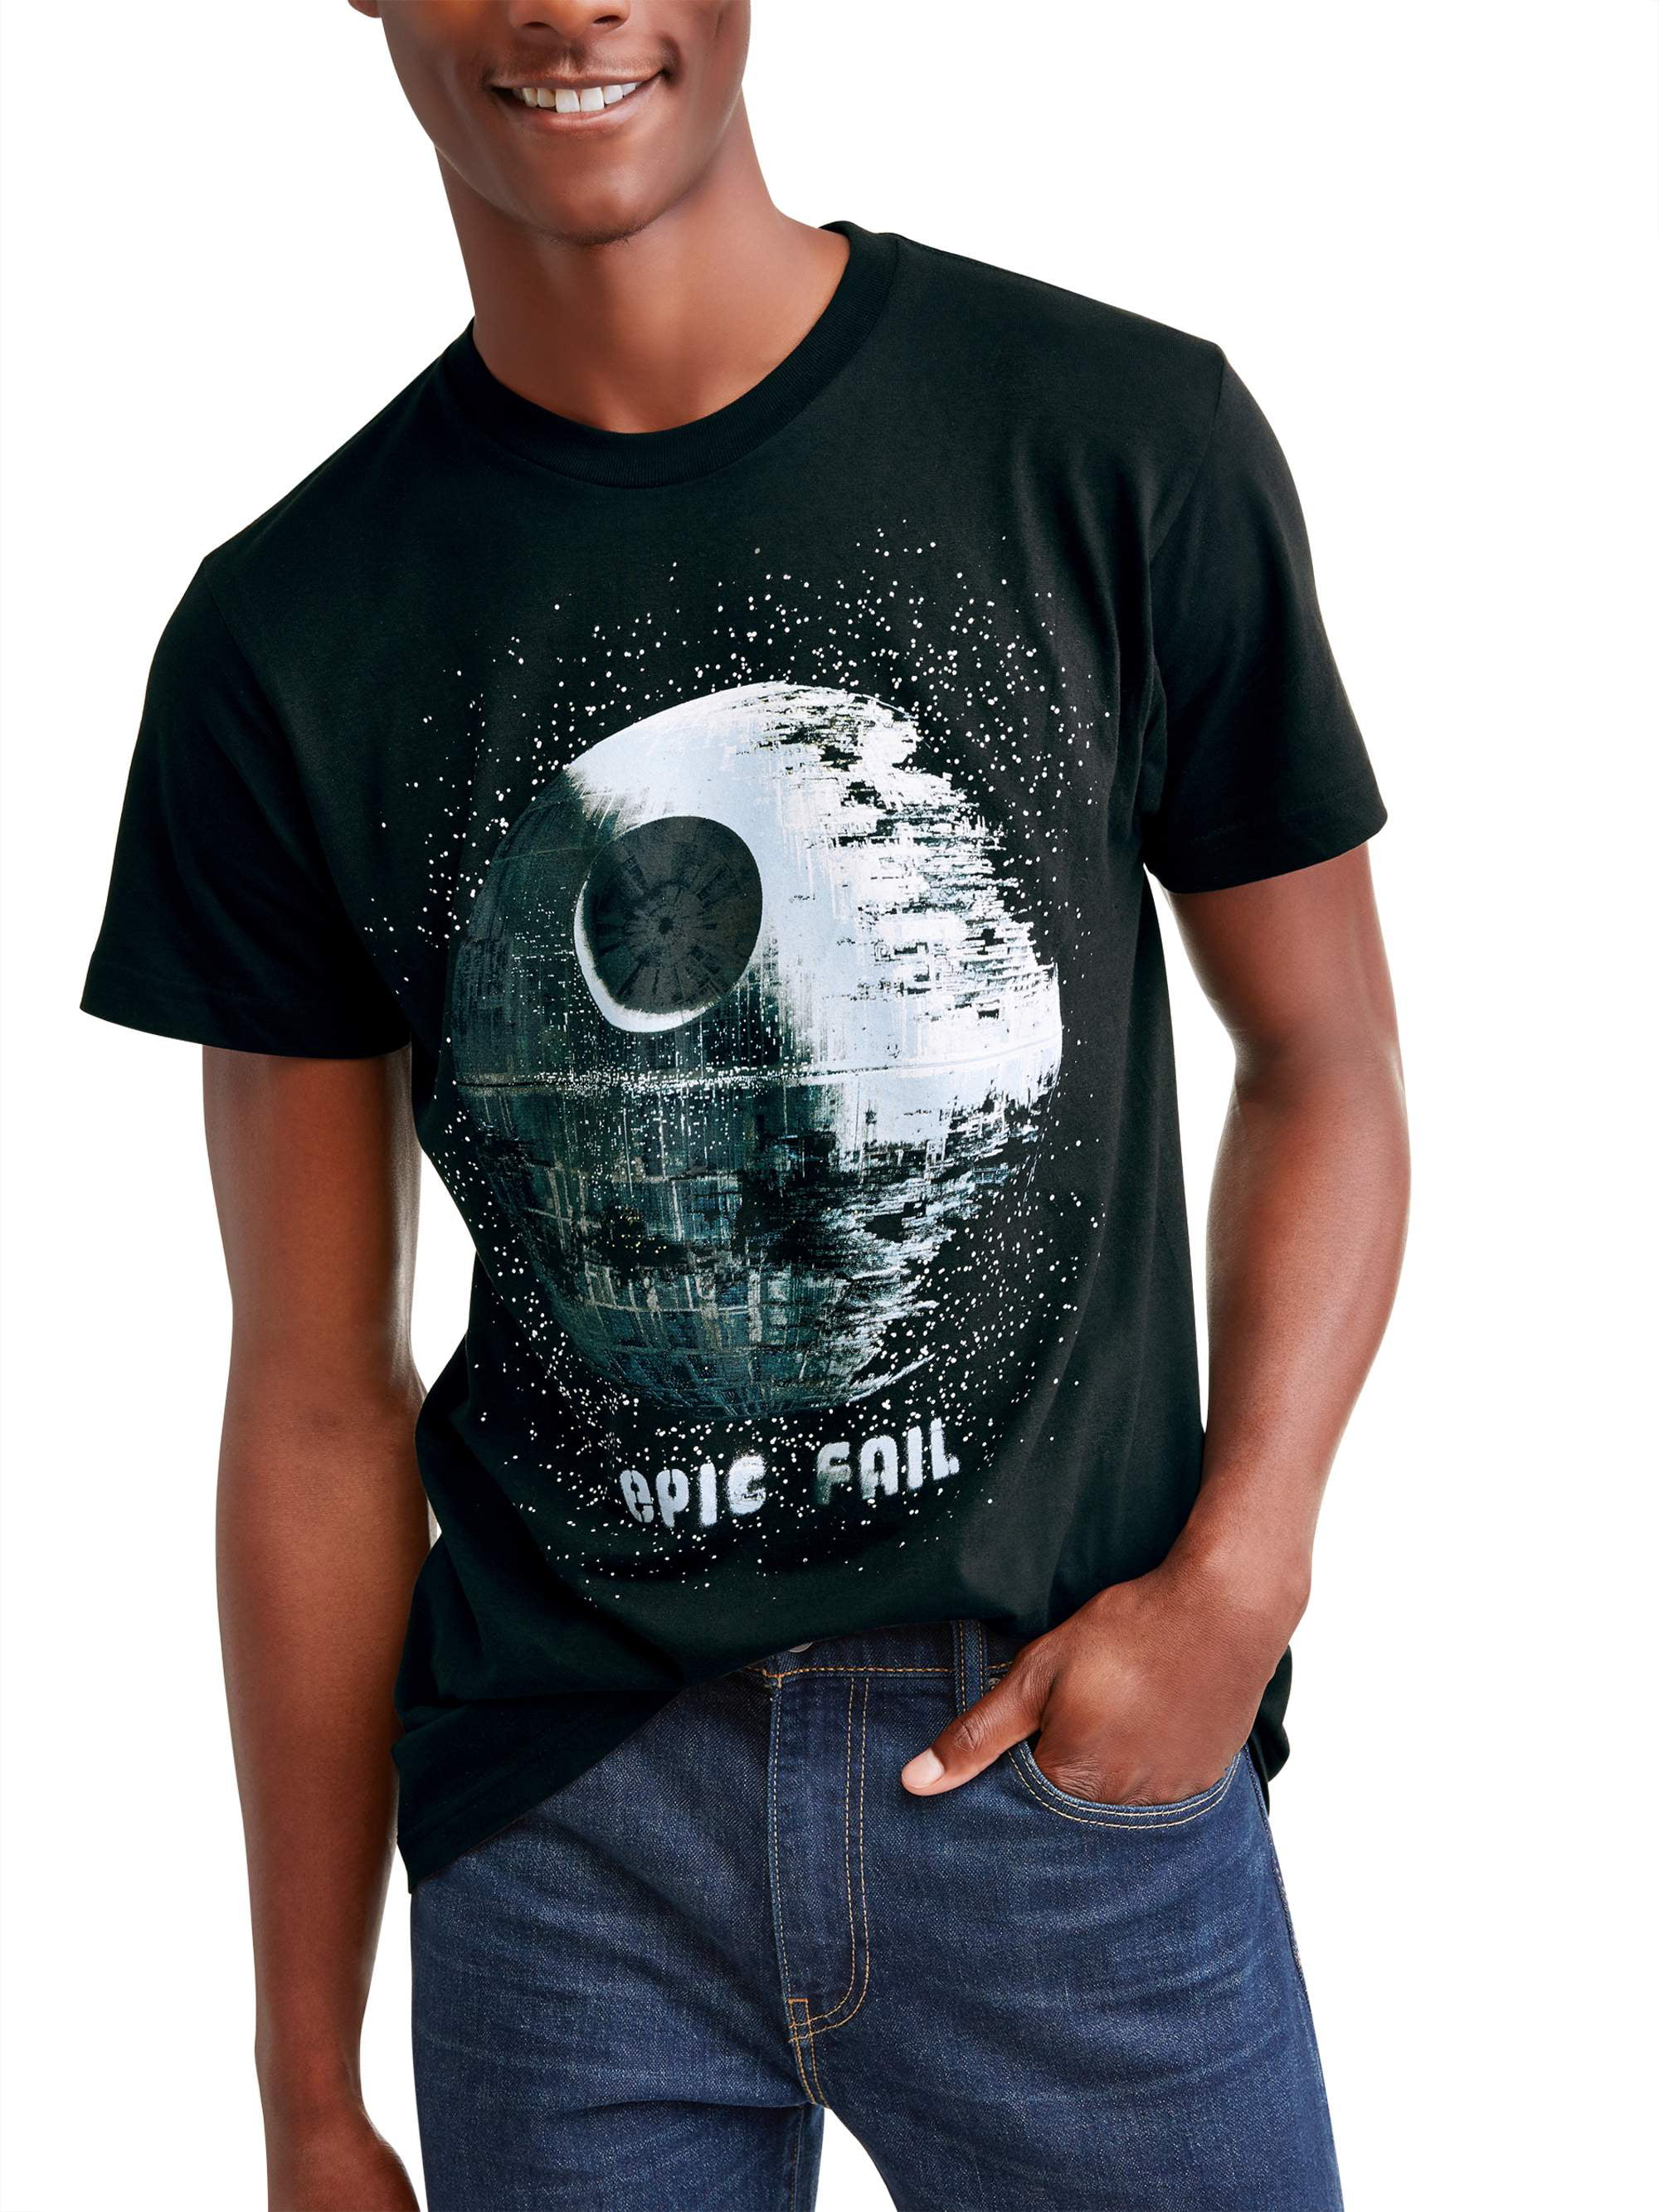 Star Wars - Star Wars Men's Death Star Epic Fail Short Sleeve Graphic T ...